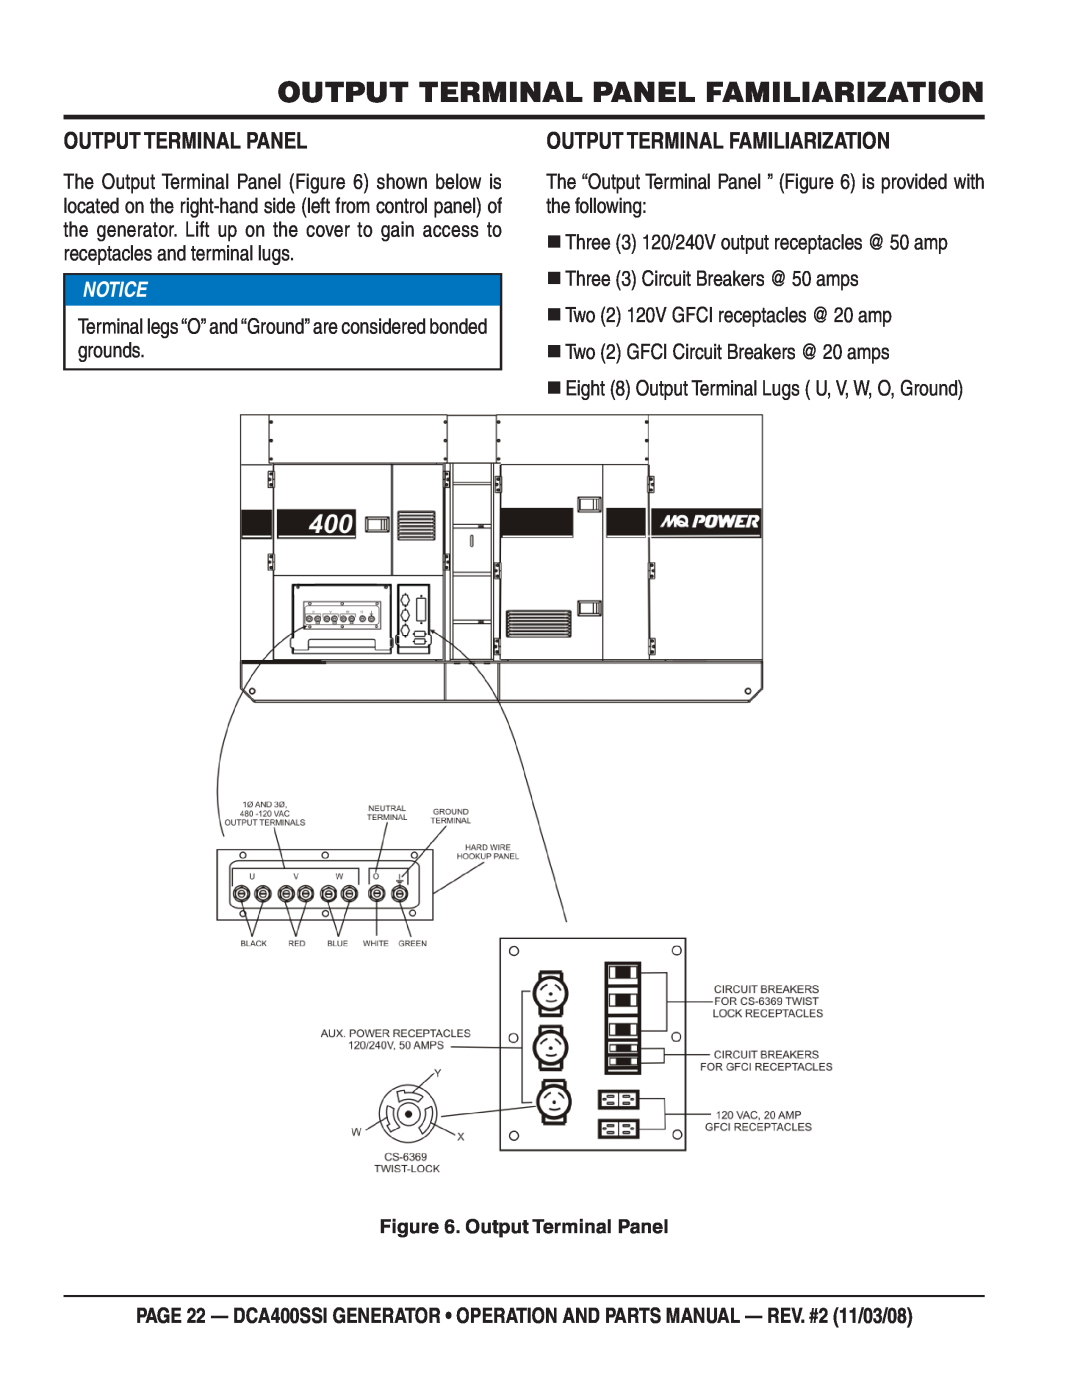 Multiquip DCA400SSI manual Output Terminal Panel Familiarization, Output Terminal Familiarization, Notice 